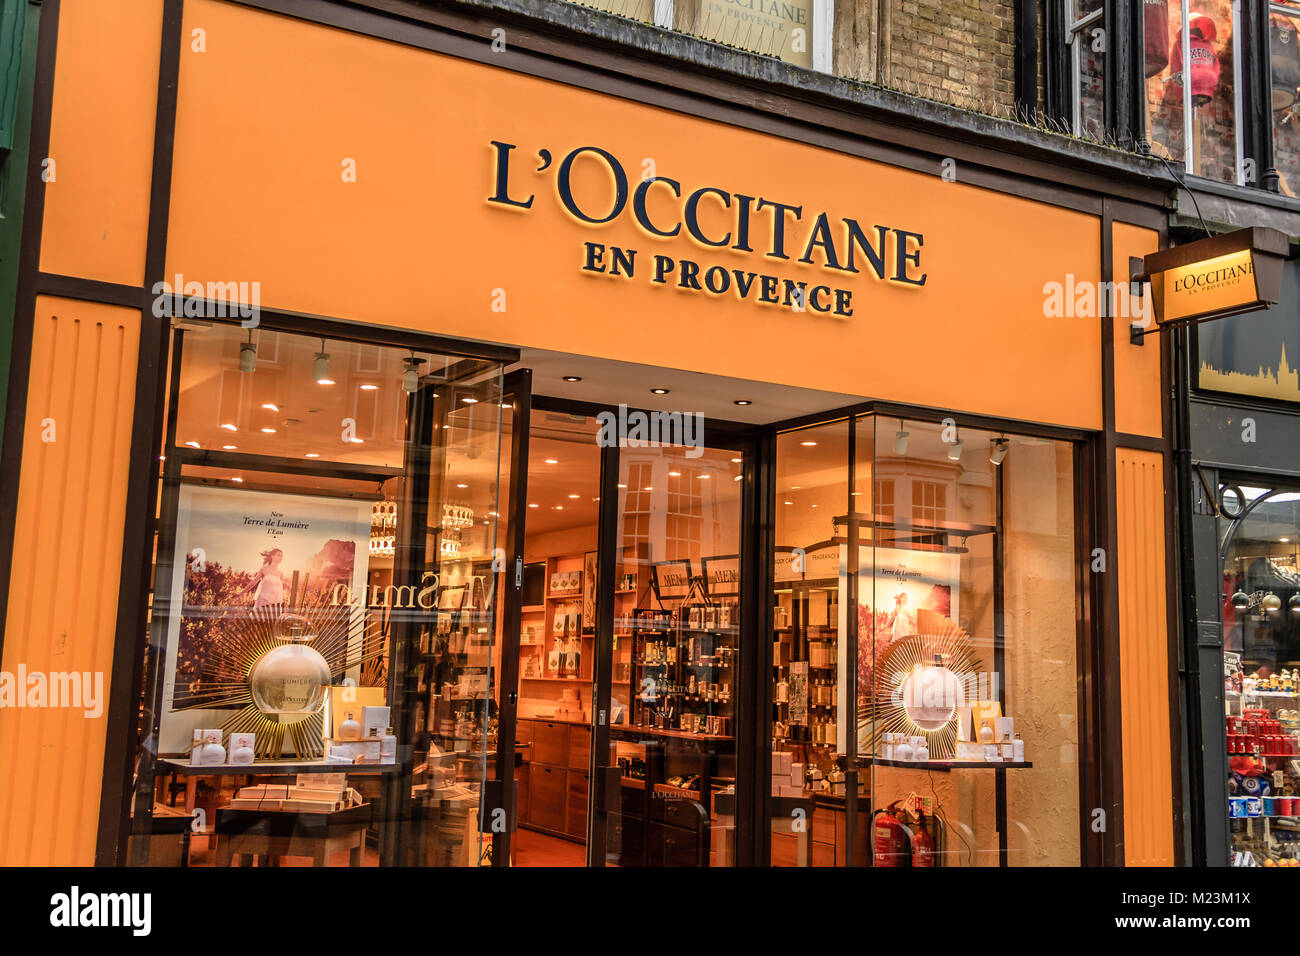 L'Occitane en Provence fragrance high street chain shop on Cornmarket Street, Oxford, Oxfordshire, UK. Feb 2018 Stock Photo